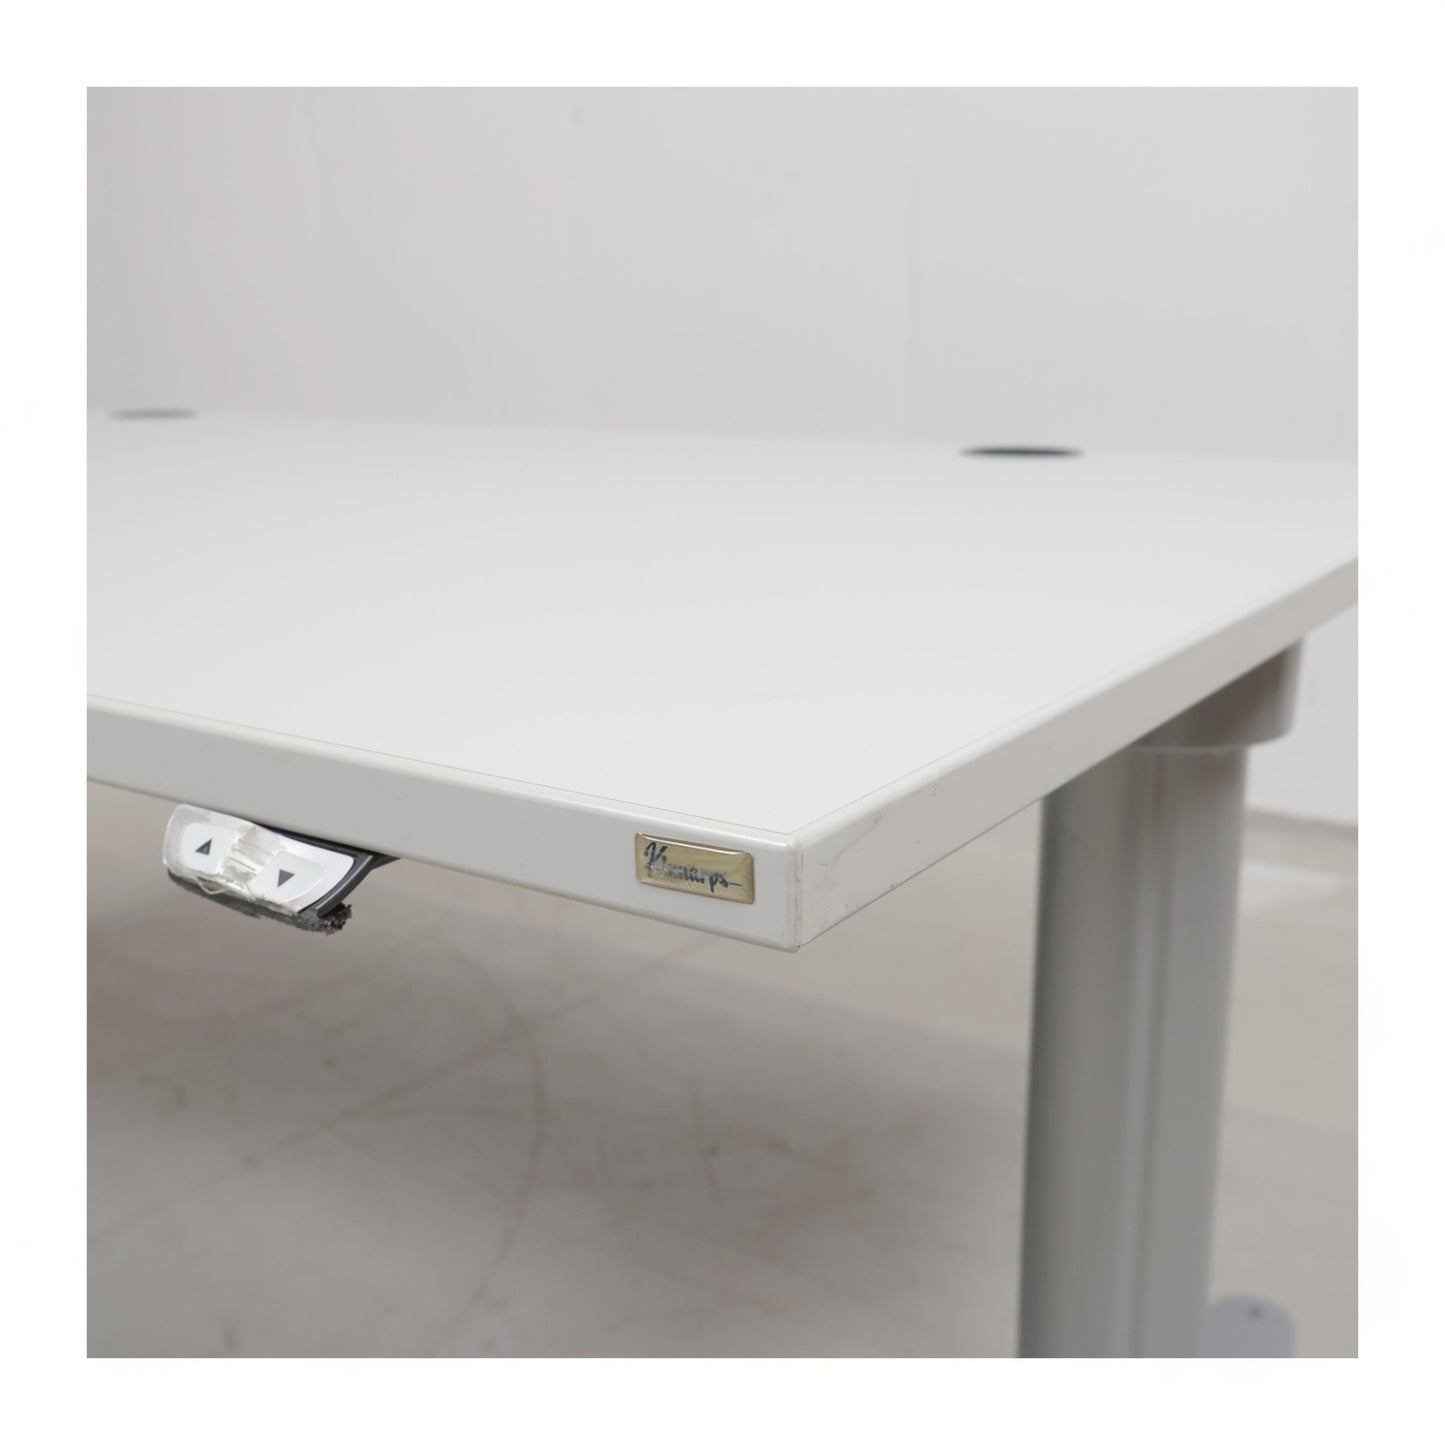 Kvalitetssikret | 160x90 cm, elektrisk hev/senk skrivebord. Kinnarps